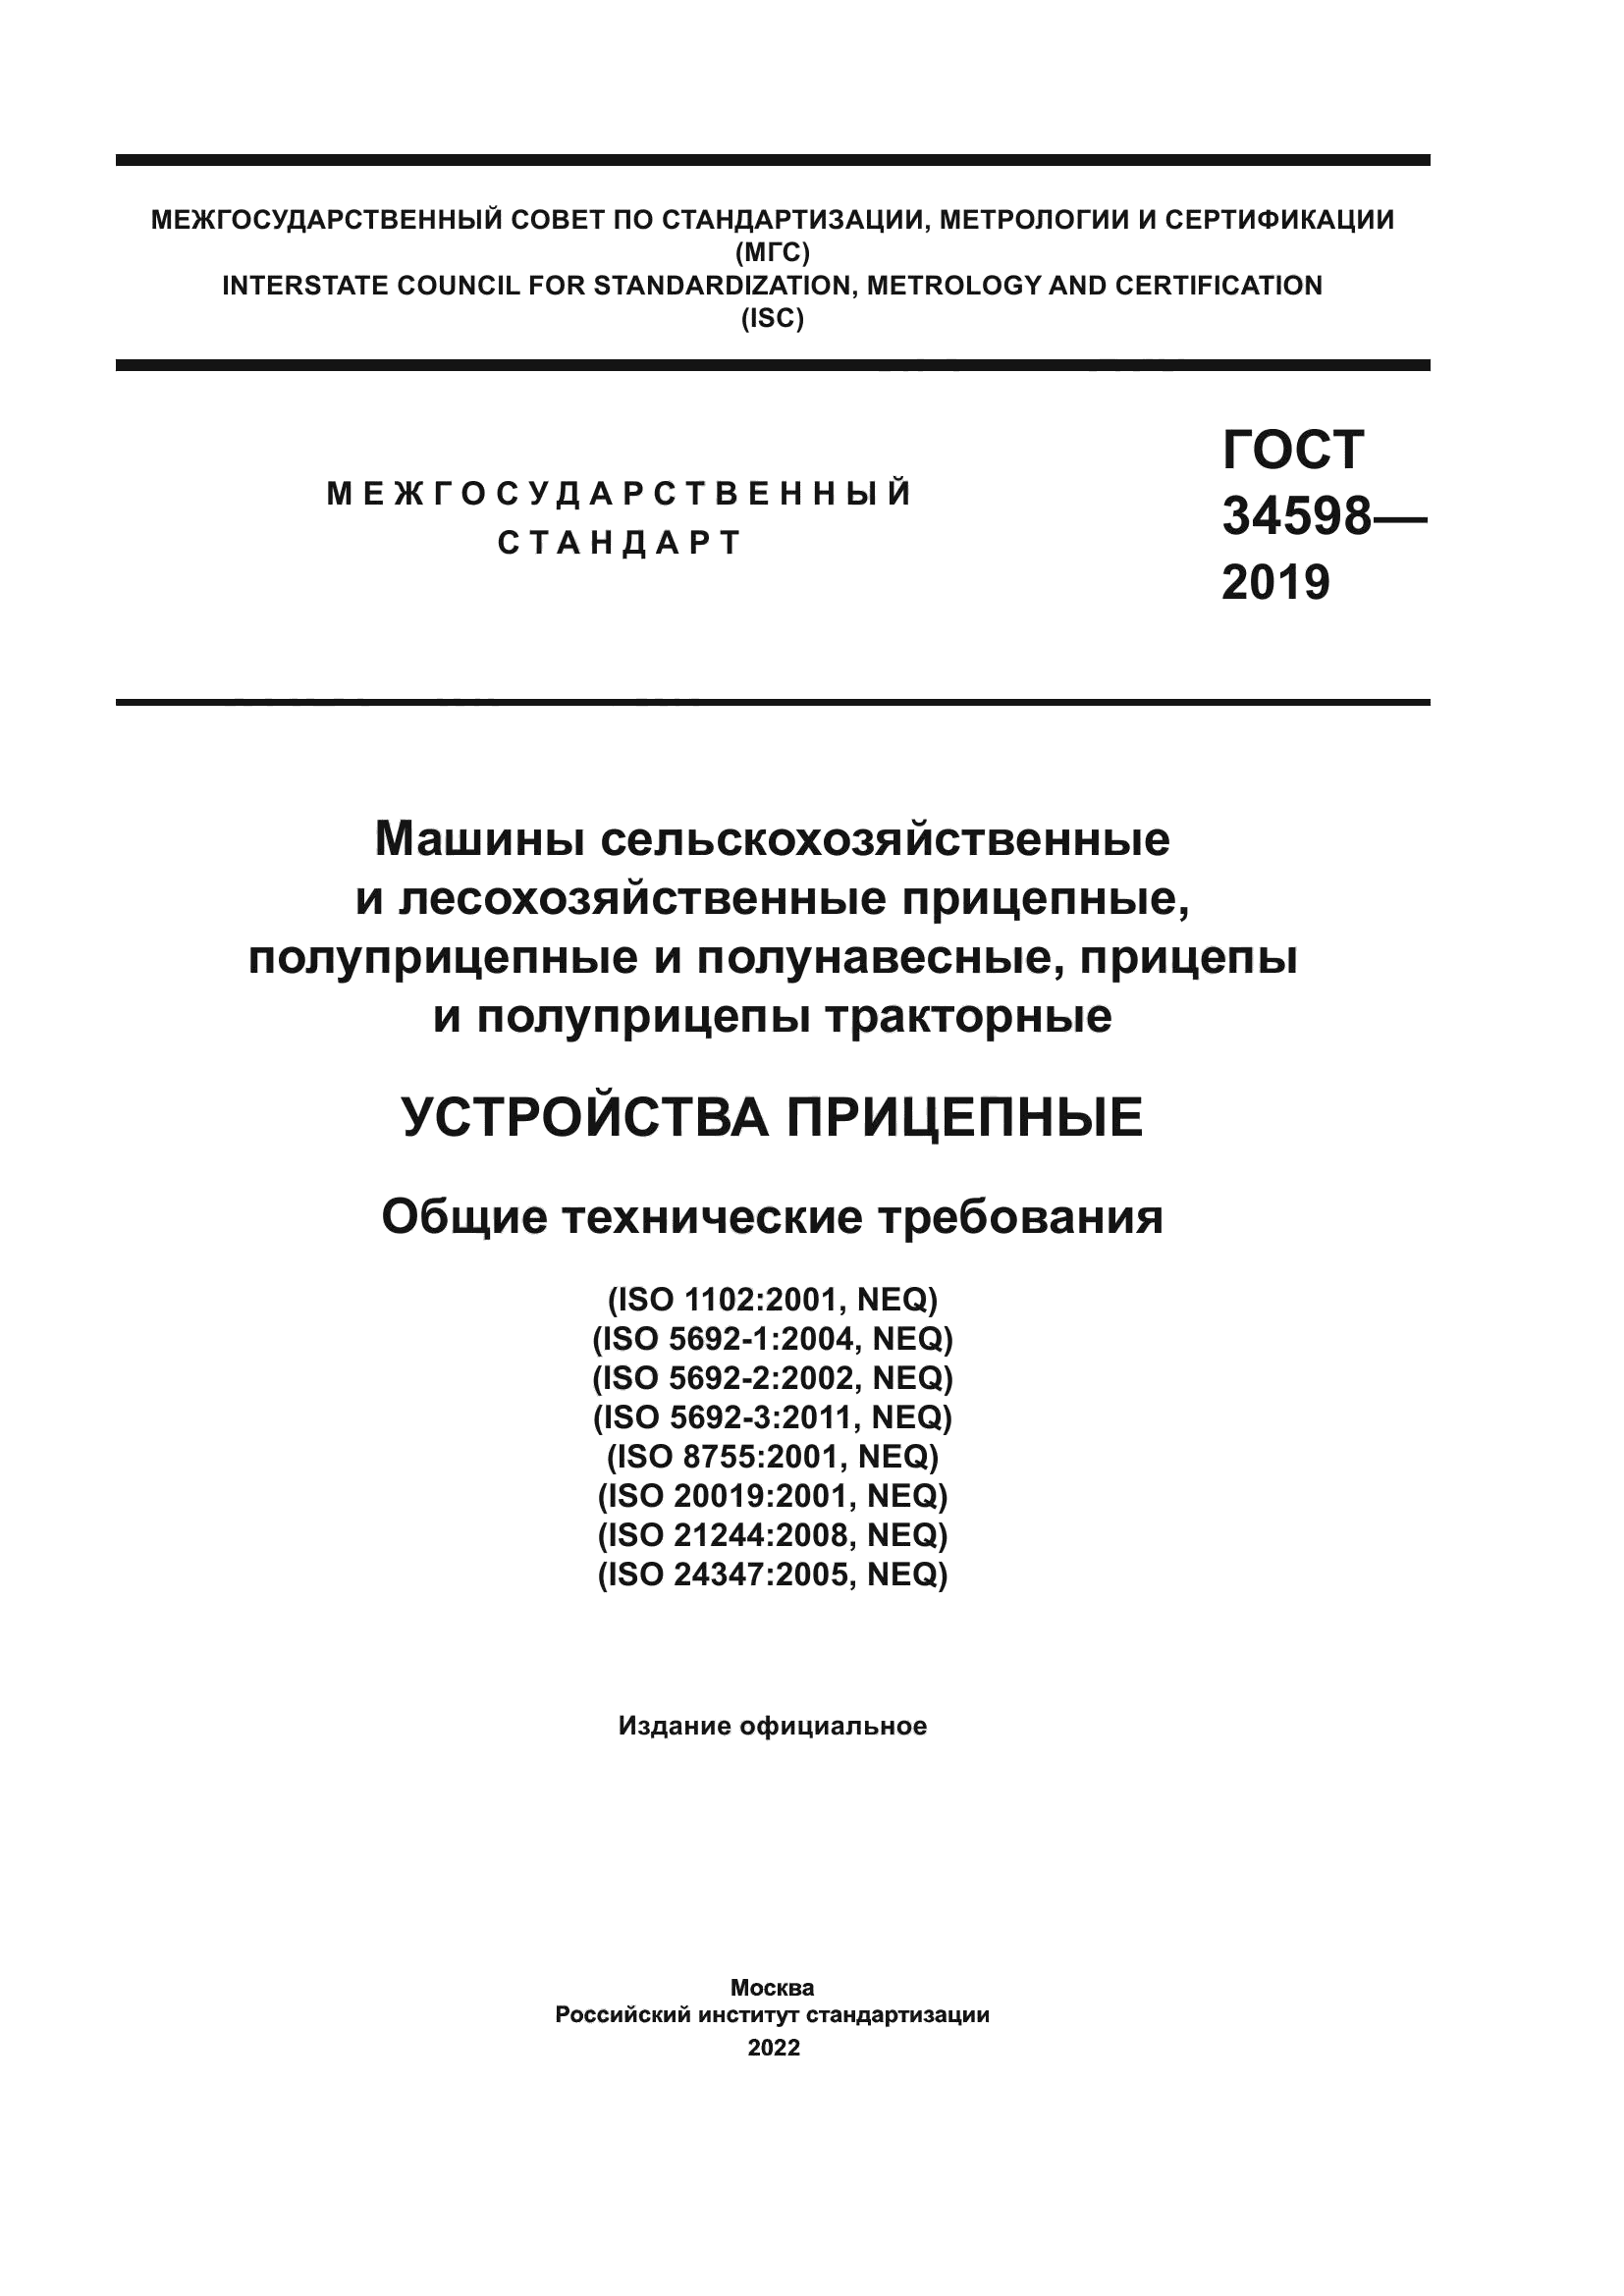 ГОСТ 34598-2019